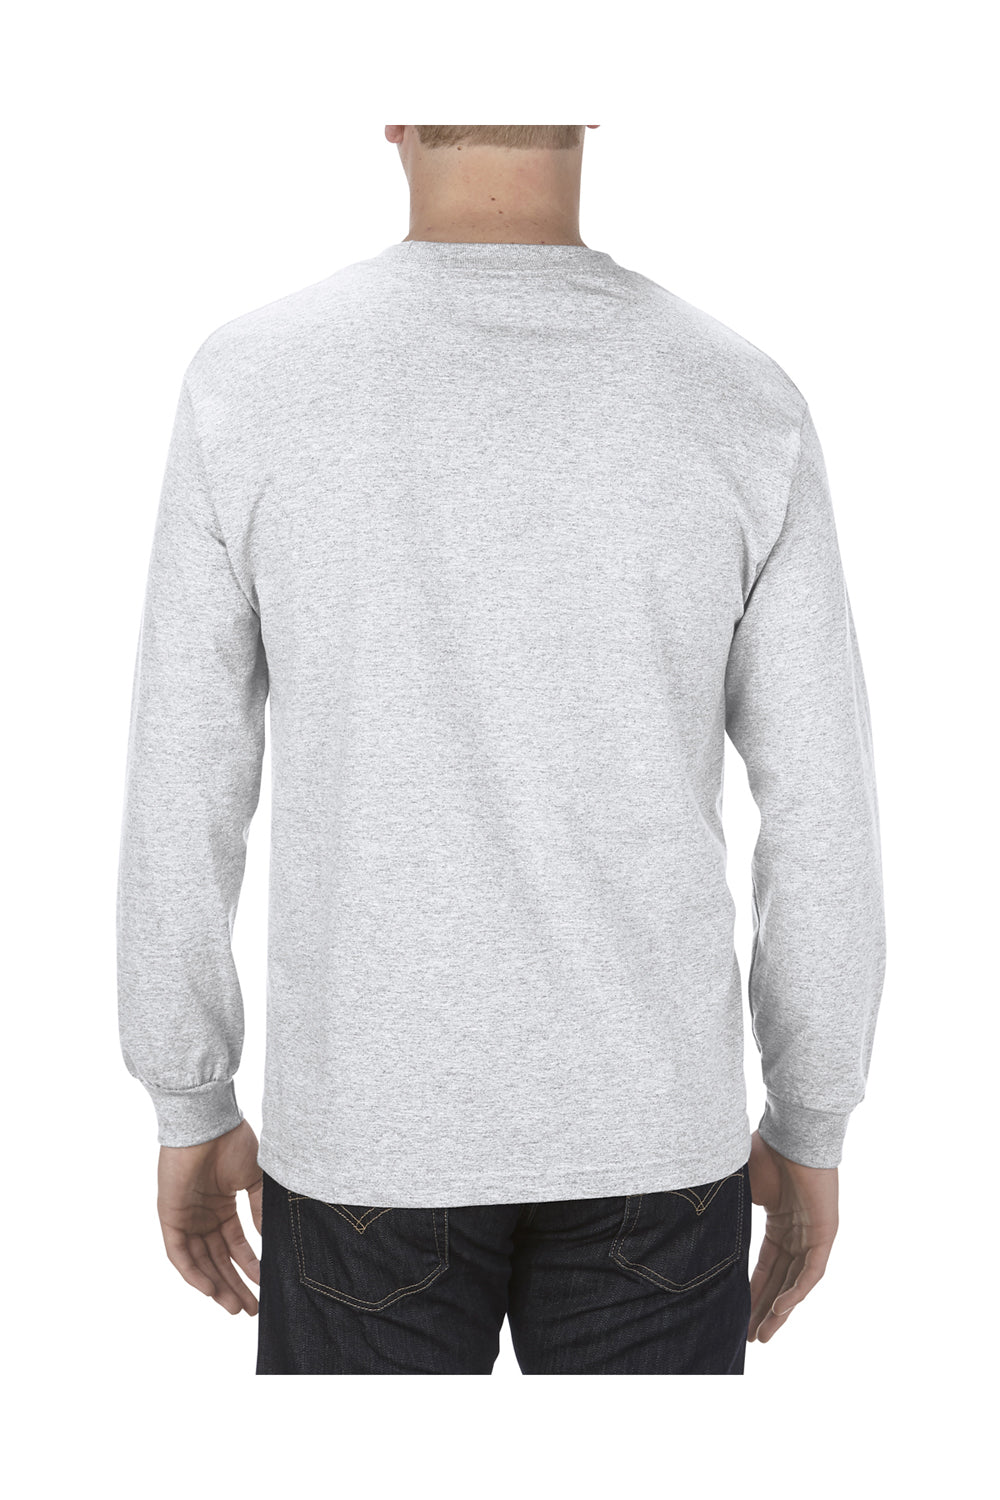 Alstyle AL1304 Mens Long Sleeve Crewneck T-Shirt Ash Grey Back